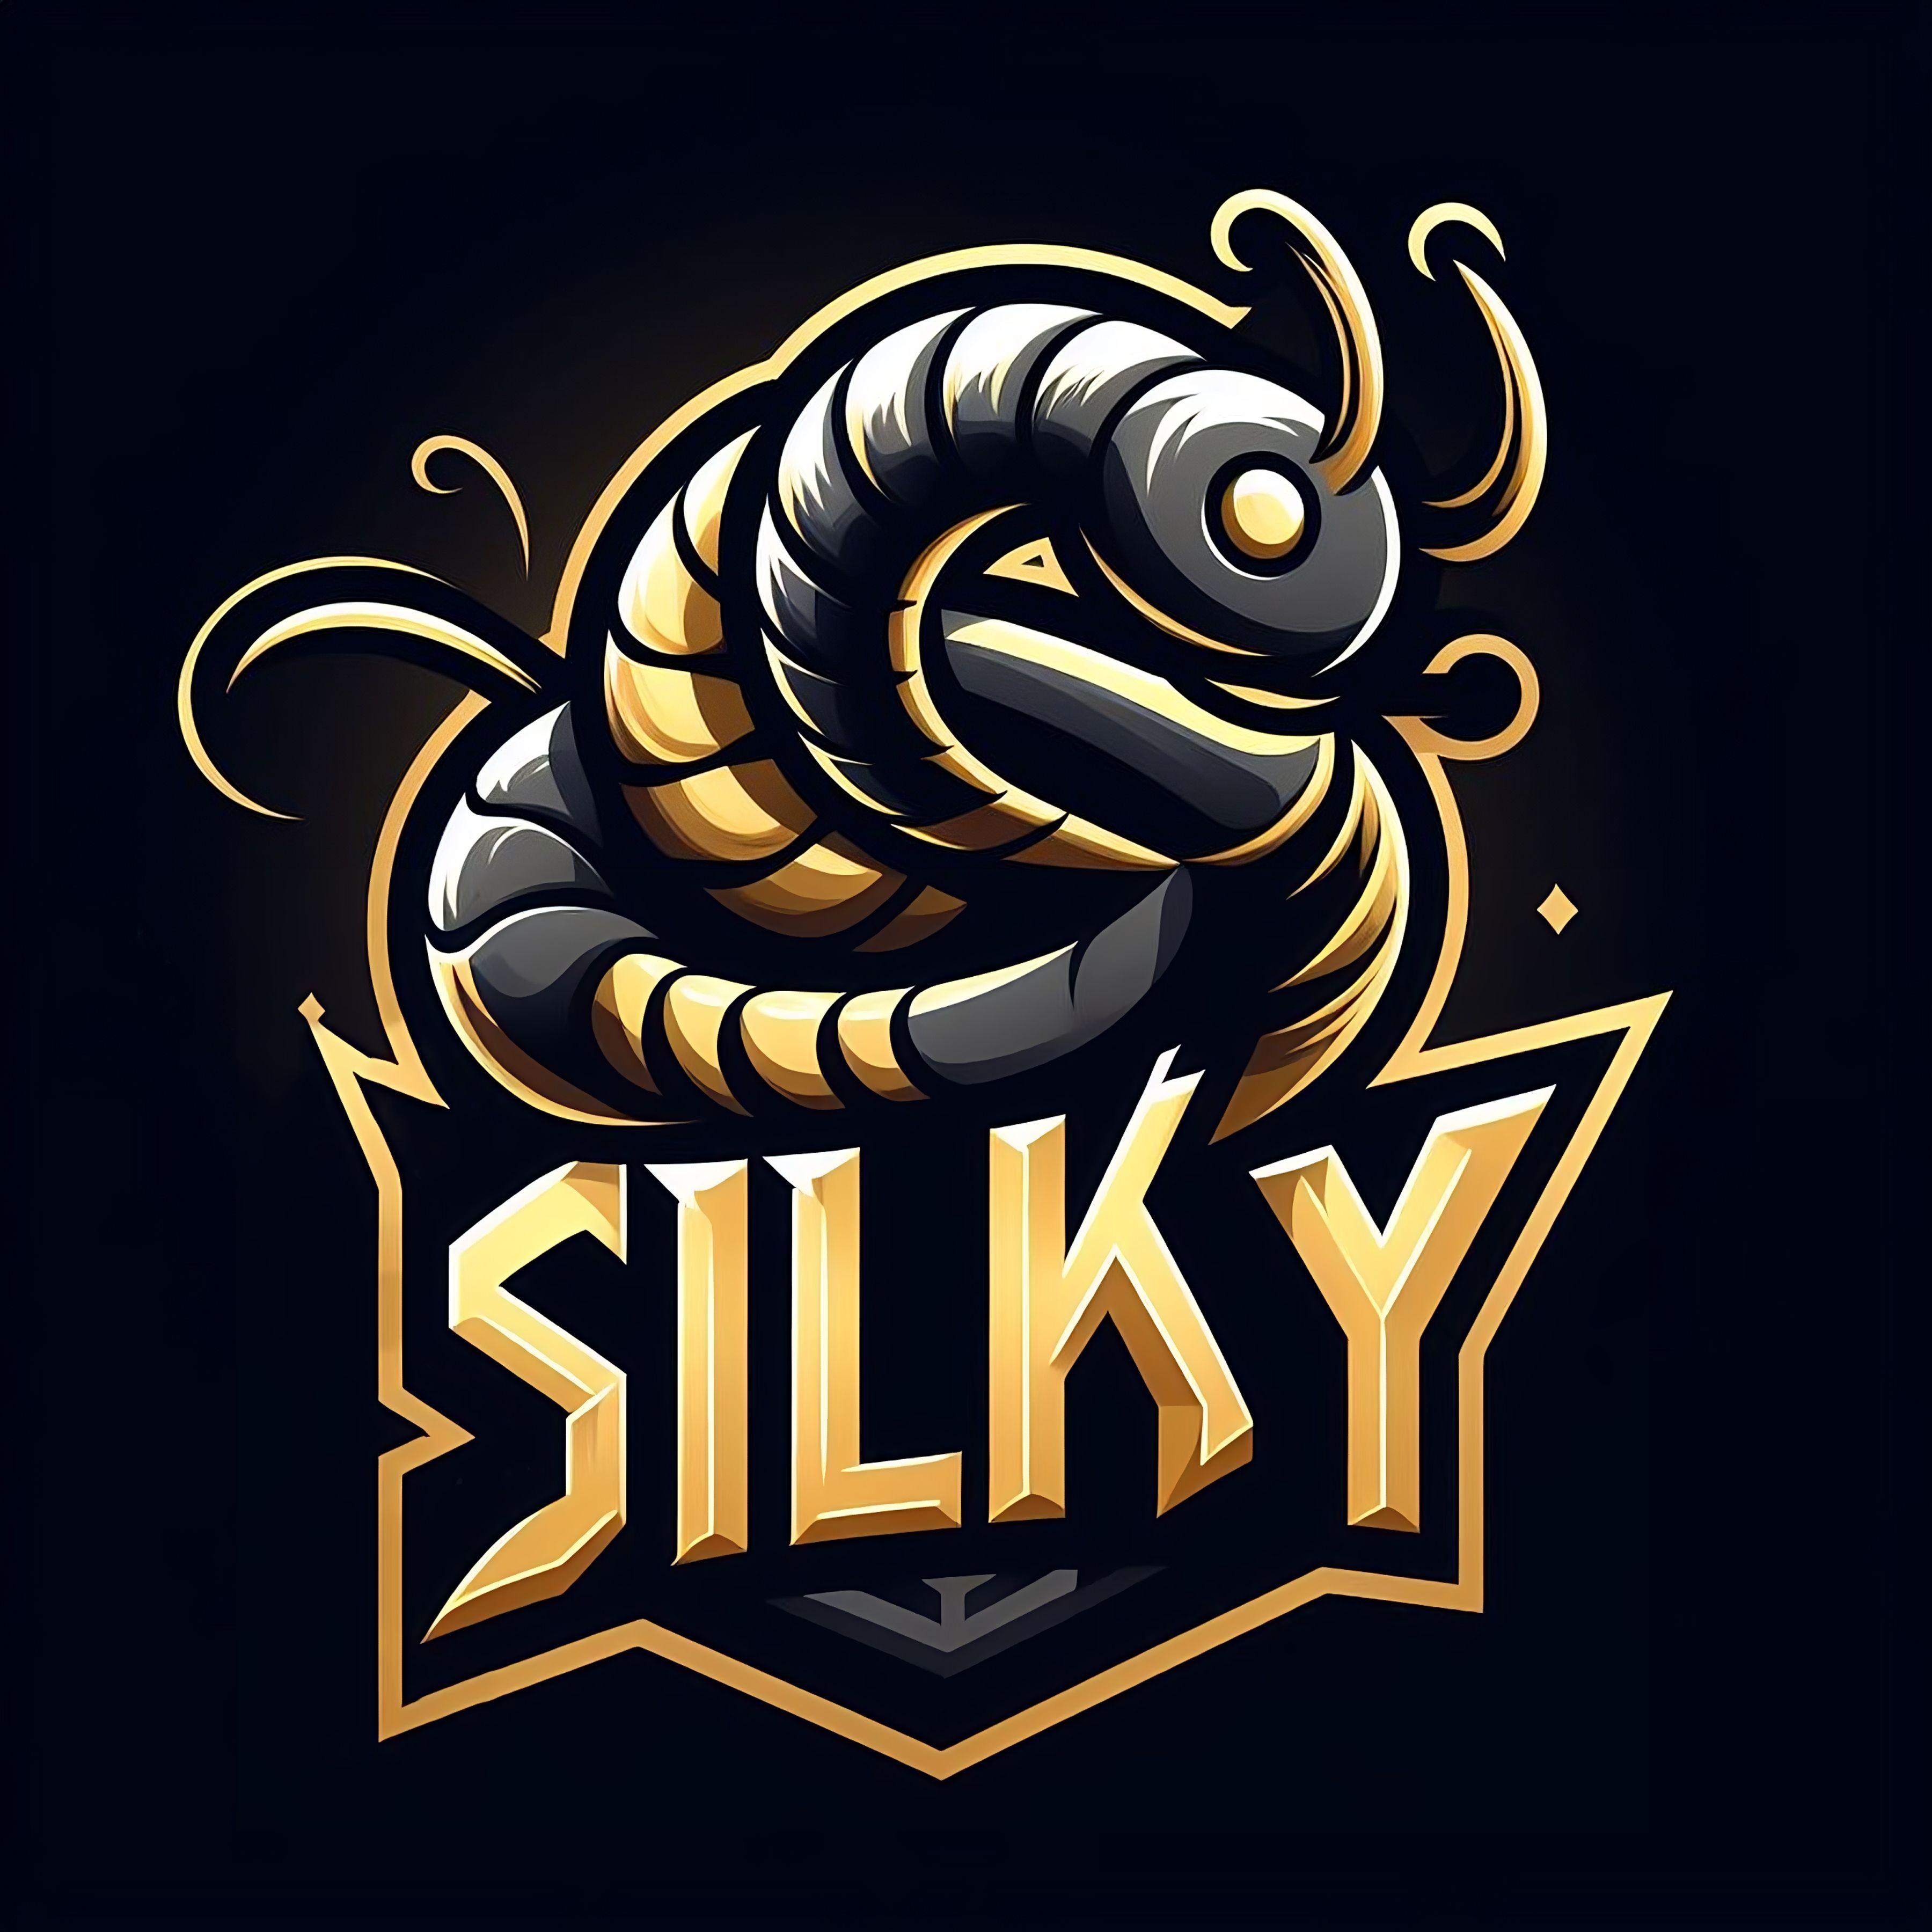 Player S1LKY_ avatar